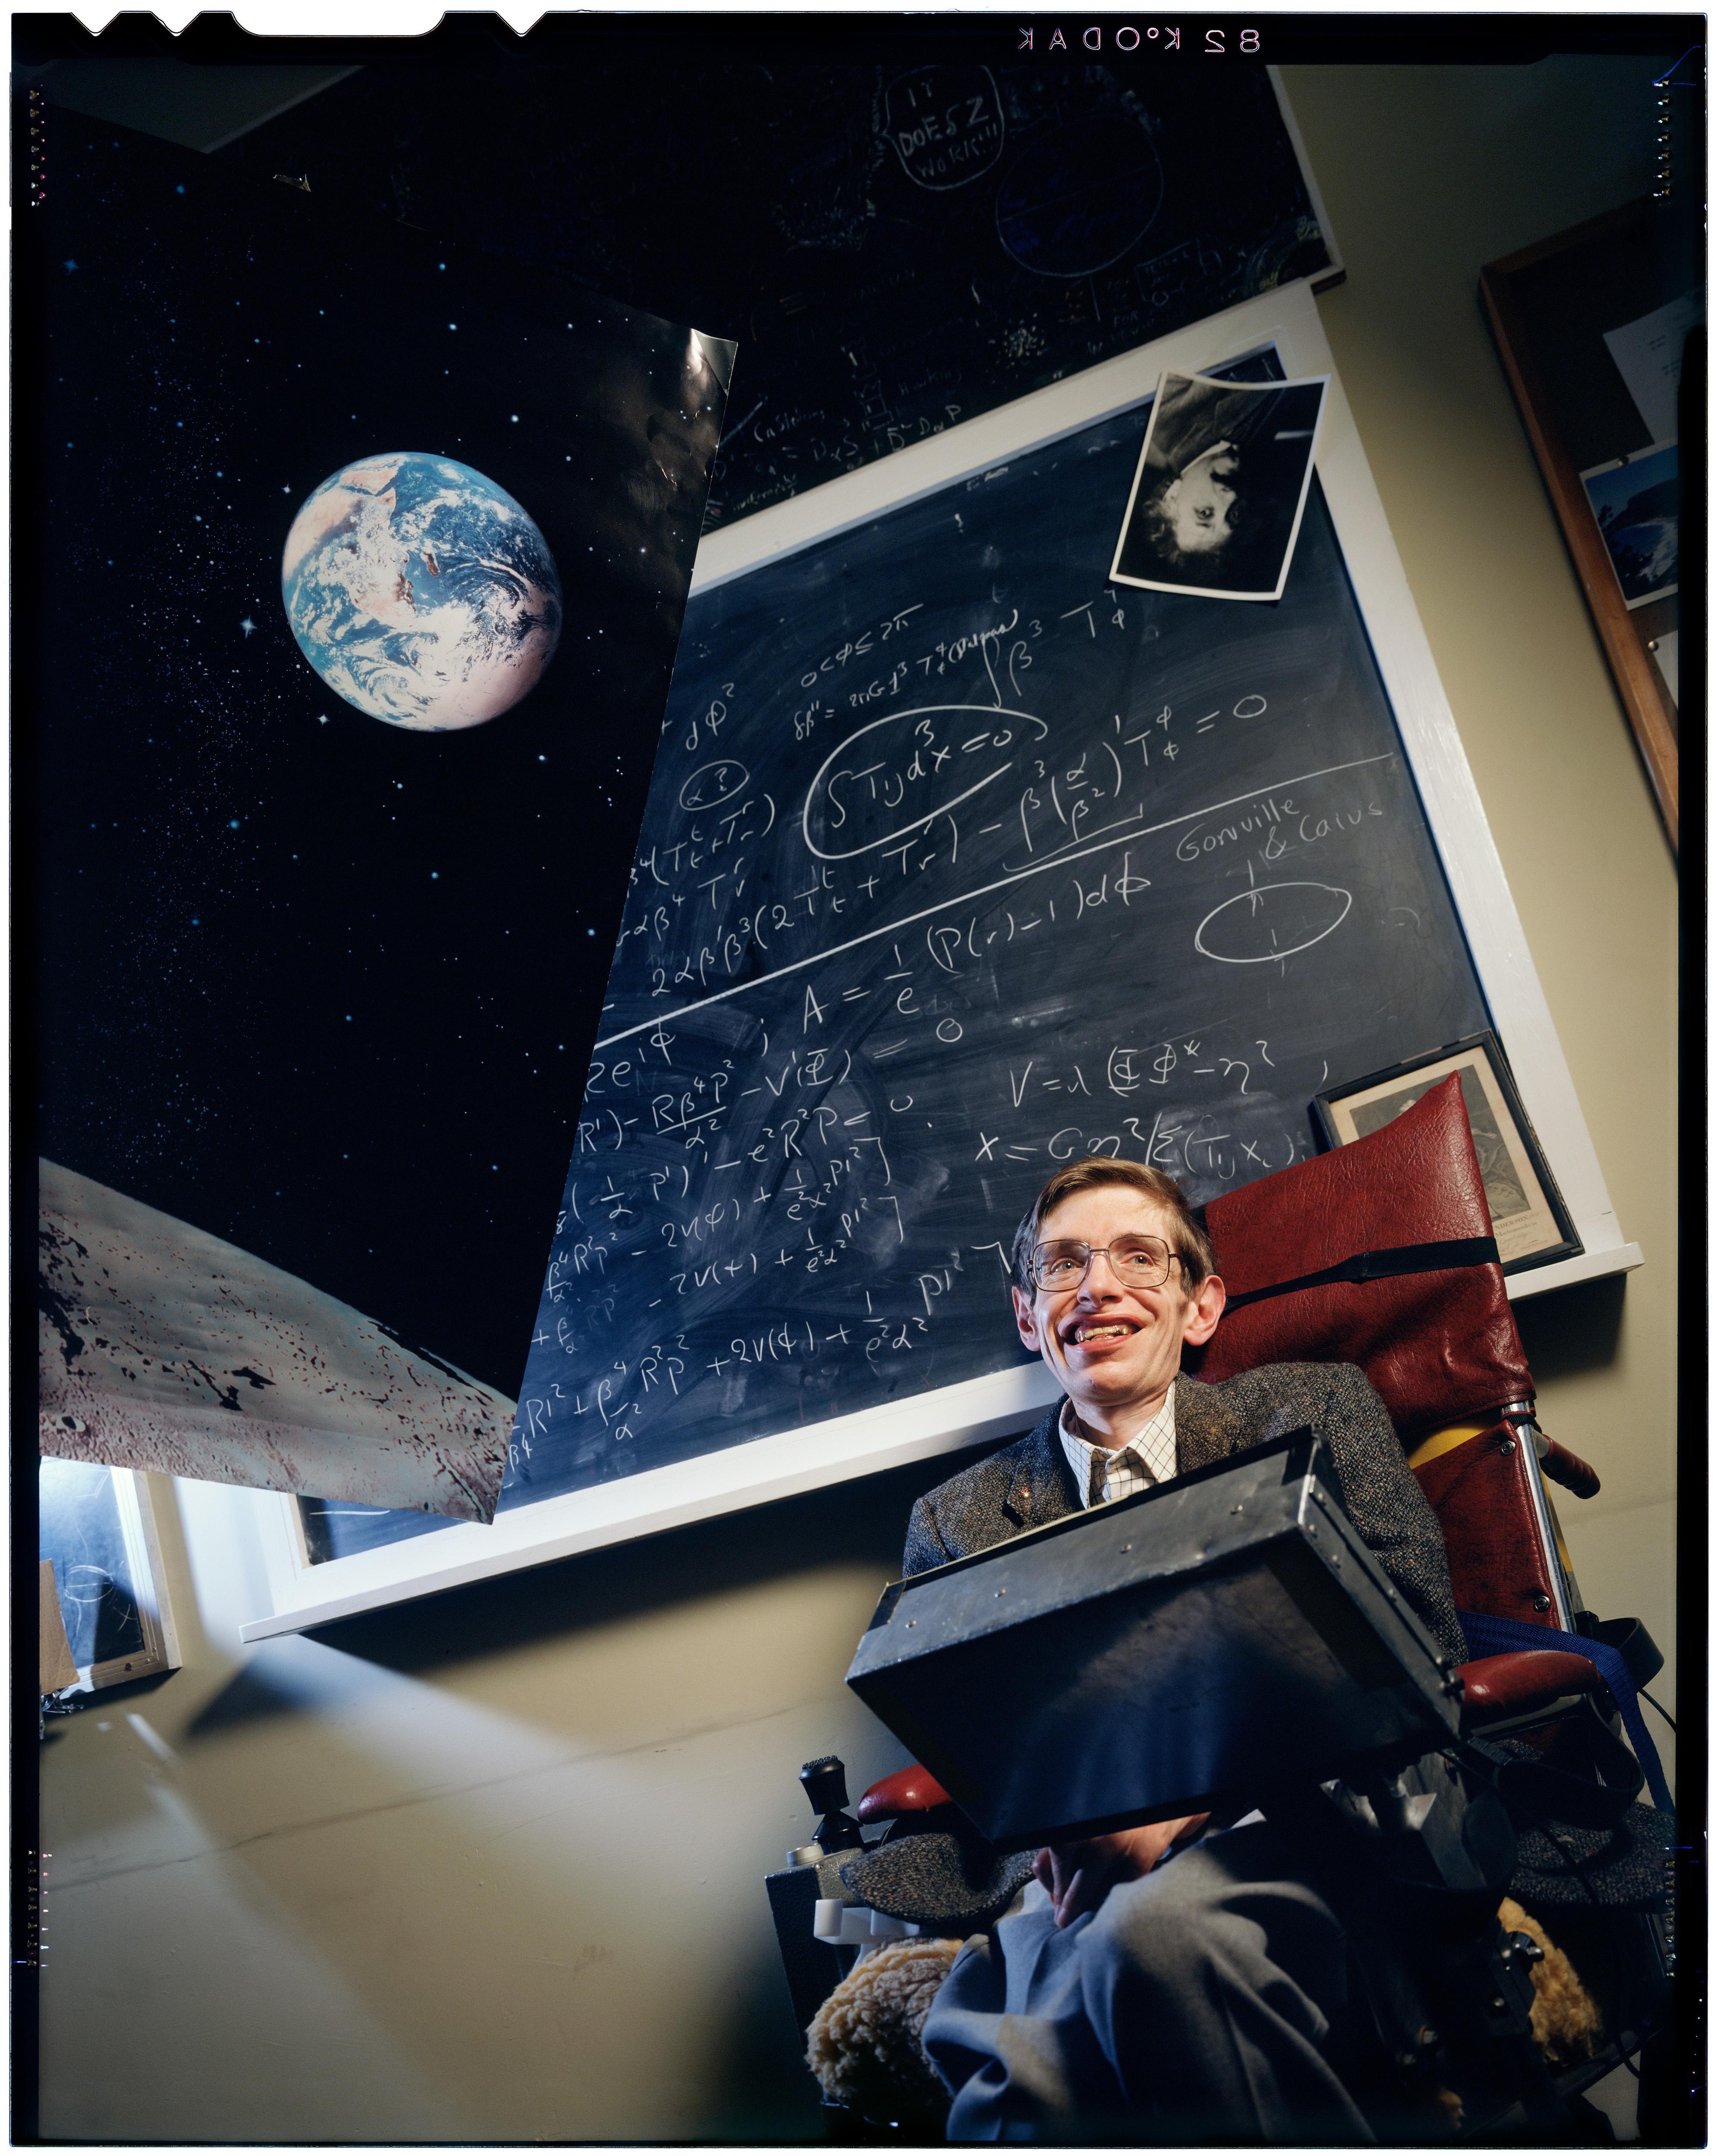 Stephen Hawking x David Gamble